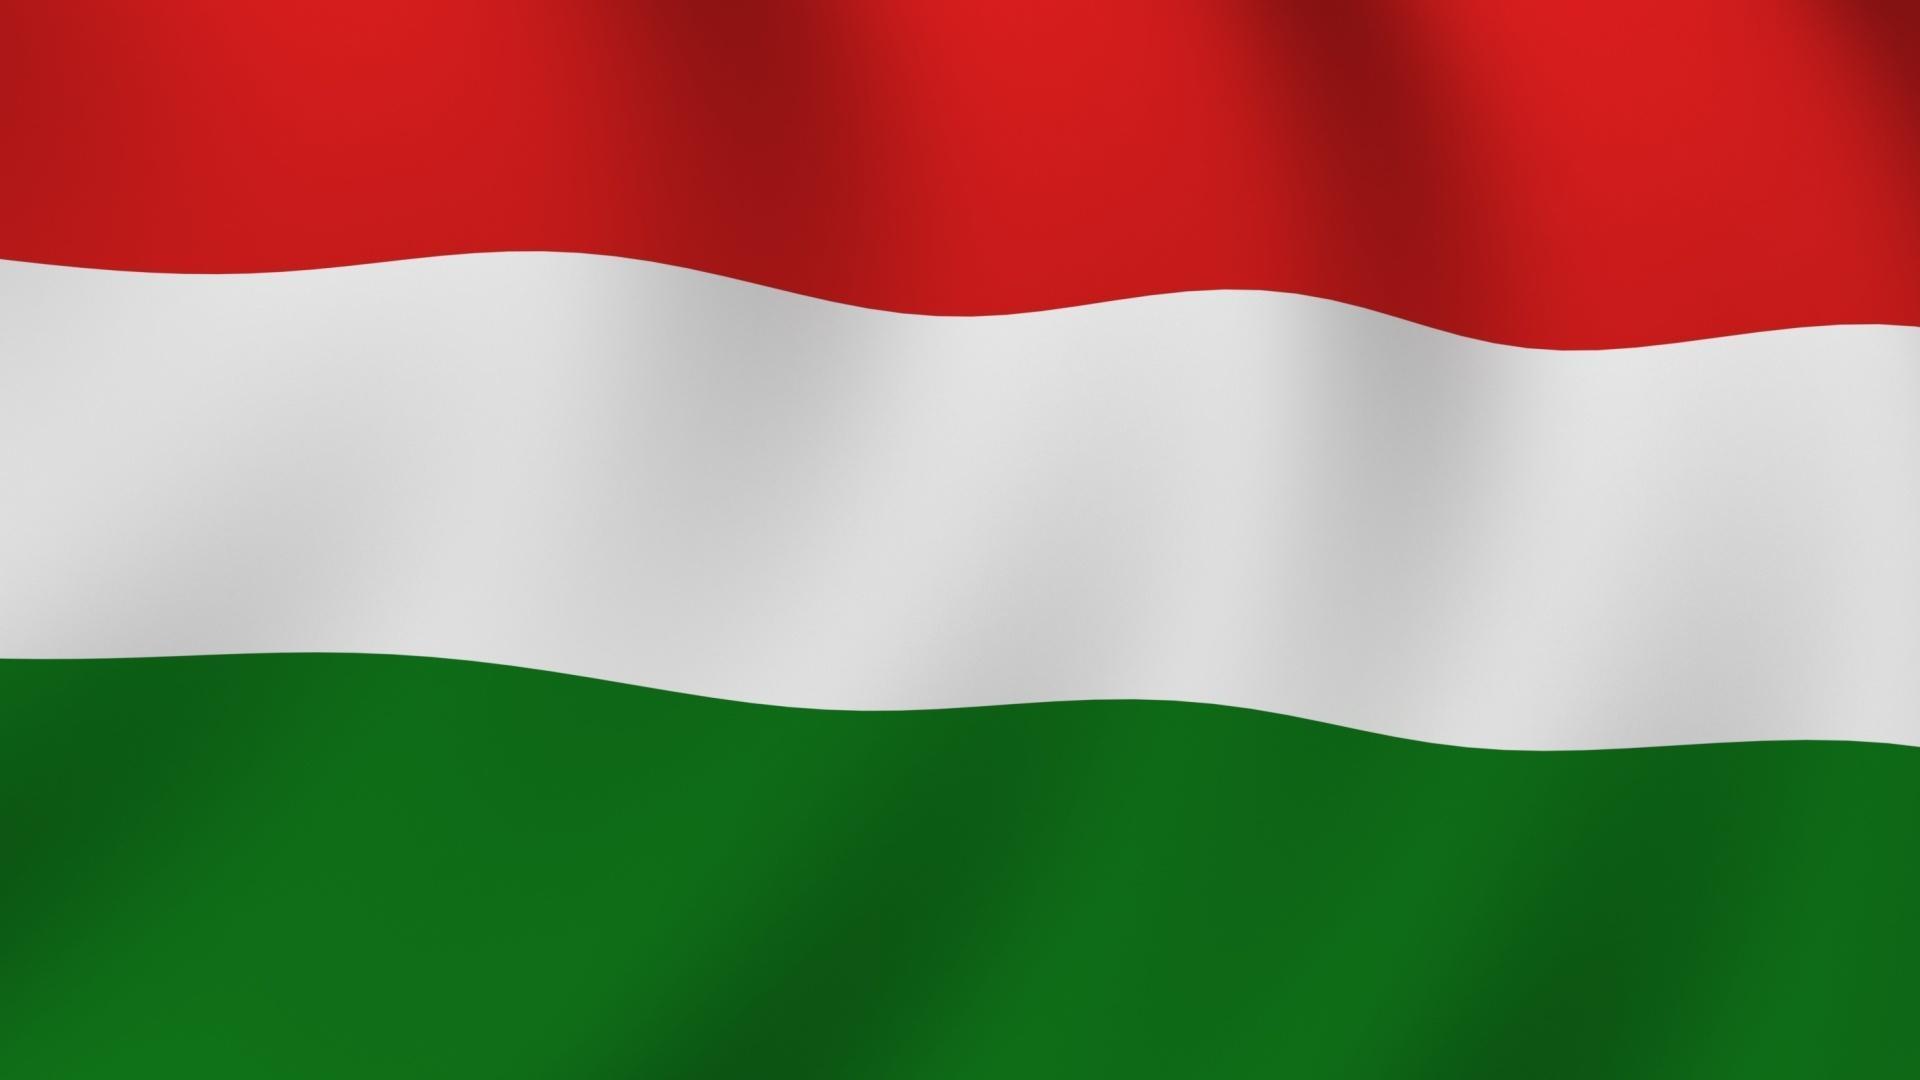 Hungary Flag Wallpaper 51629 1920x1080px